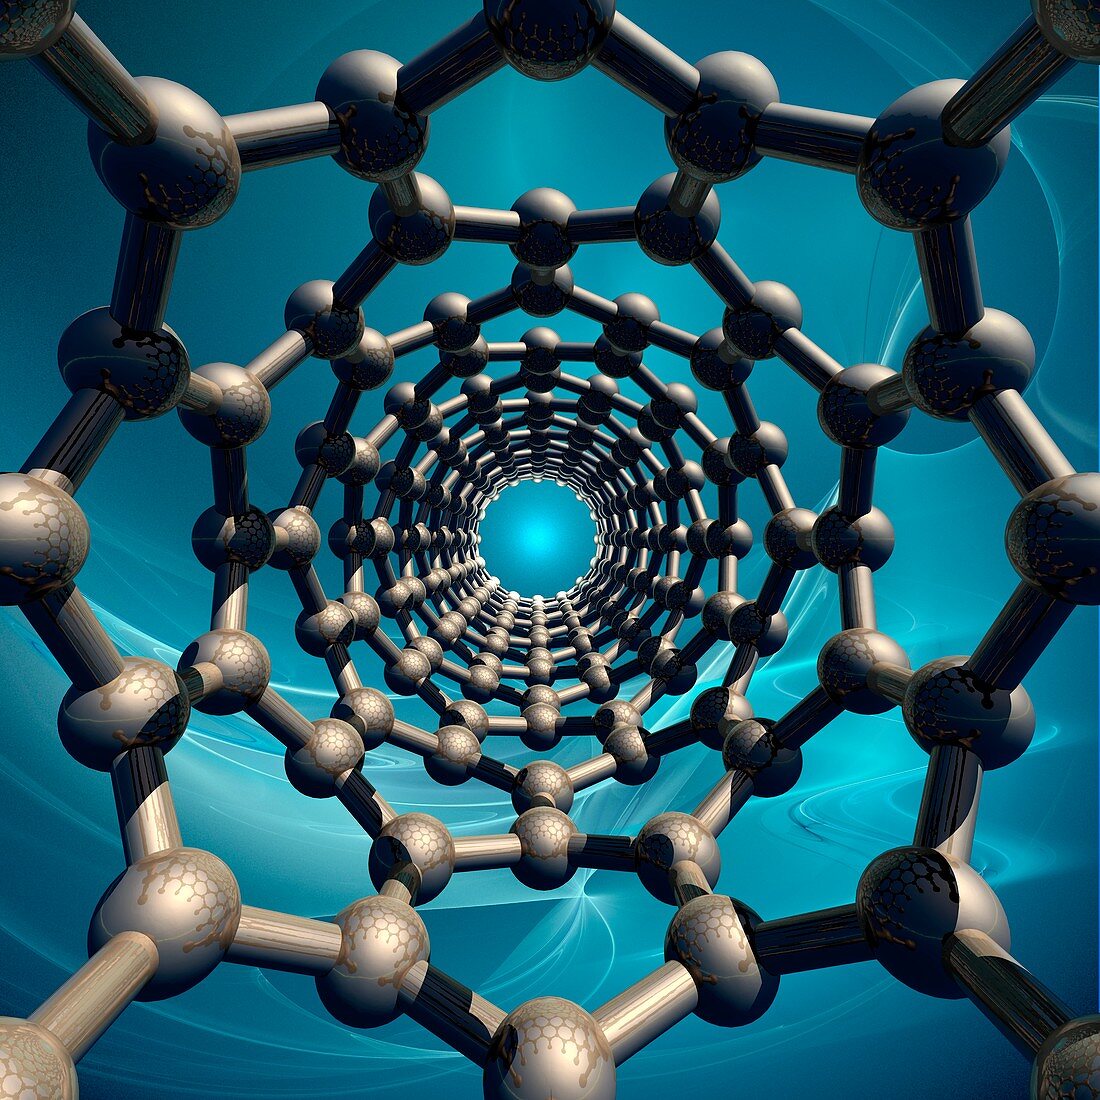 Carbon nanotube,artwork